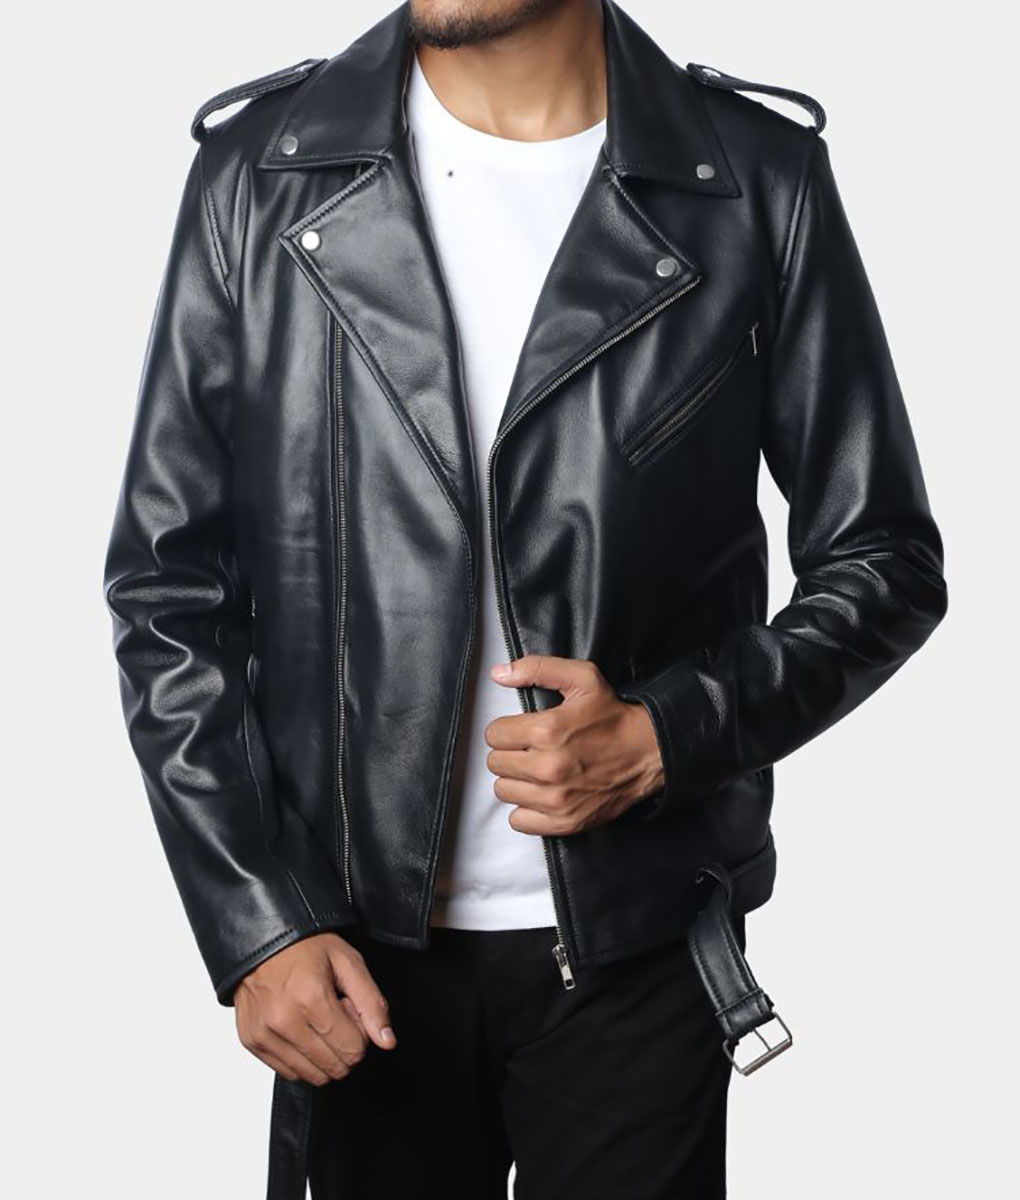 Marlon Brando The Wild One Black Leather Jacket (5)